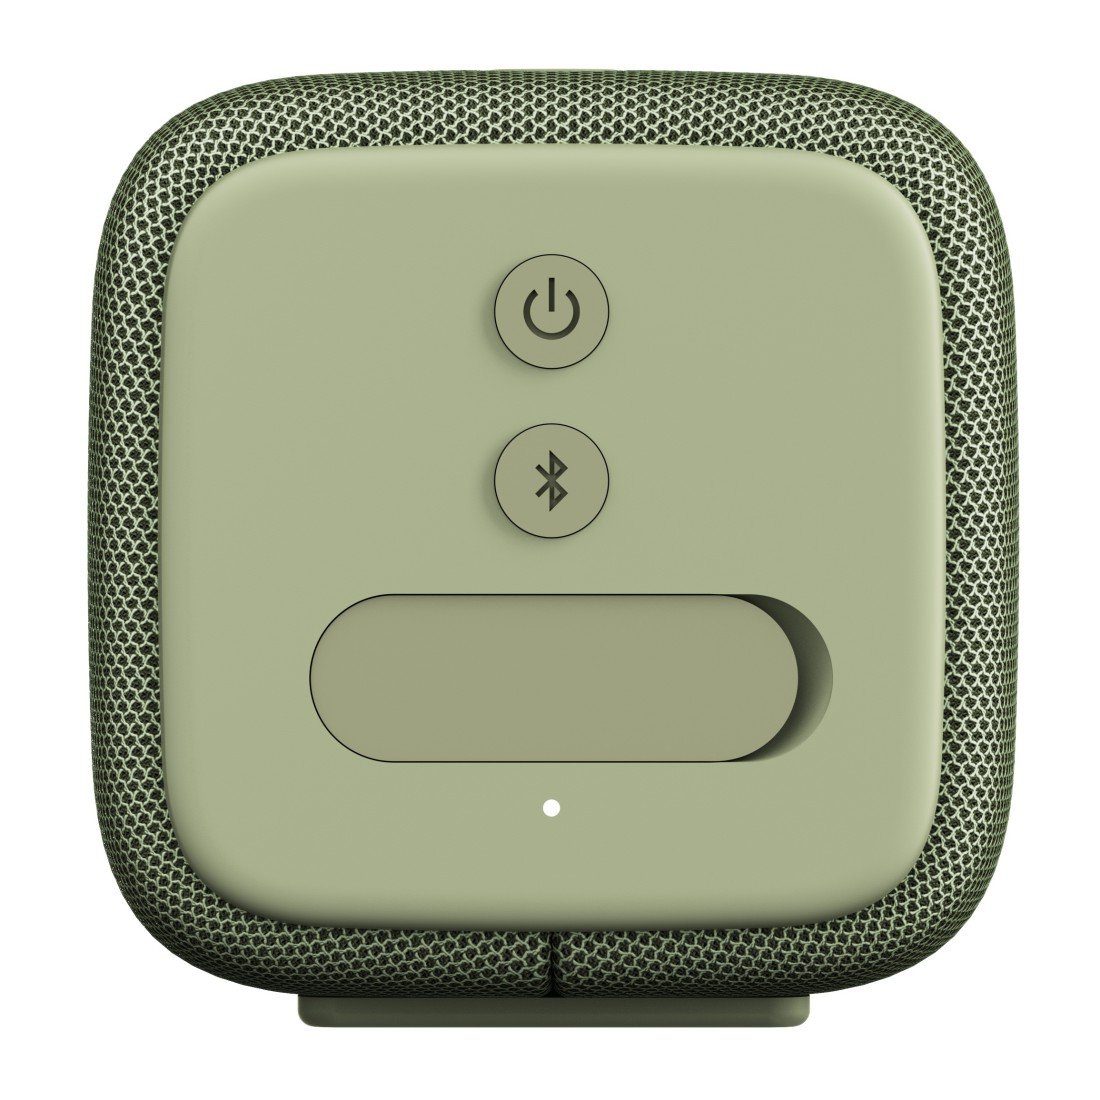 S Fresh´n Rockbox Bold Dried Rebel Bluetooth-Lautsprecher Green